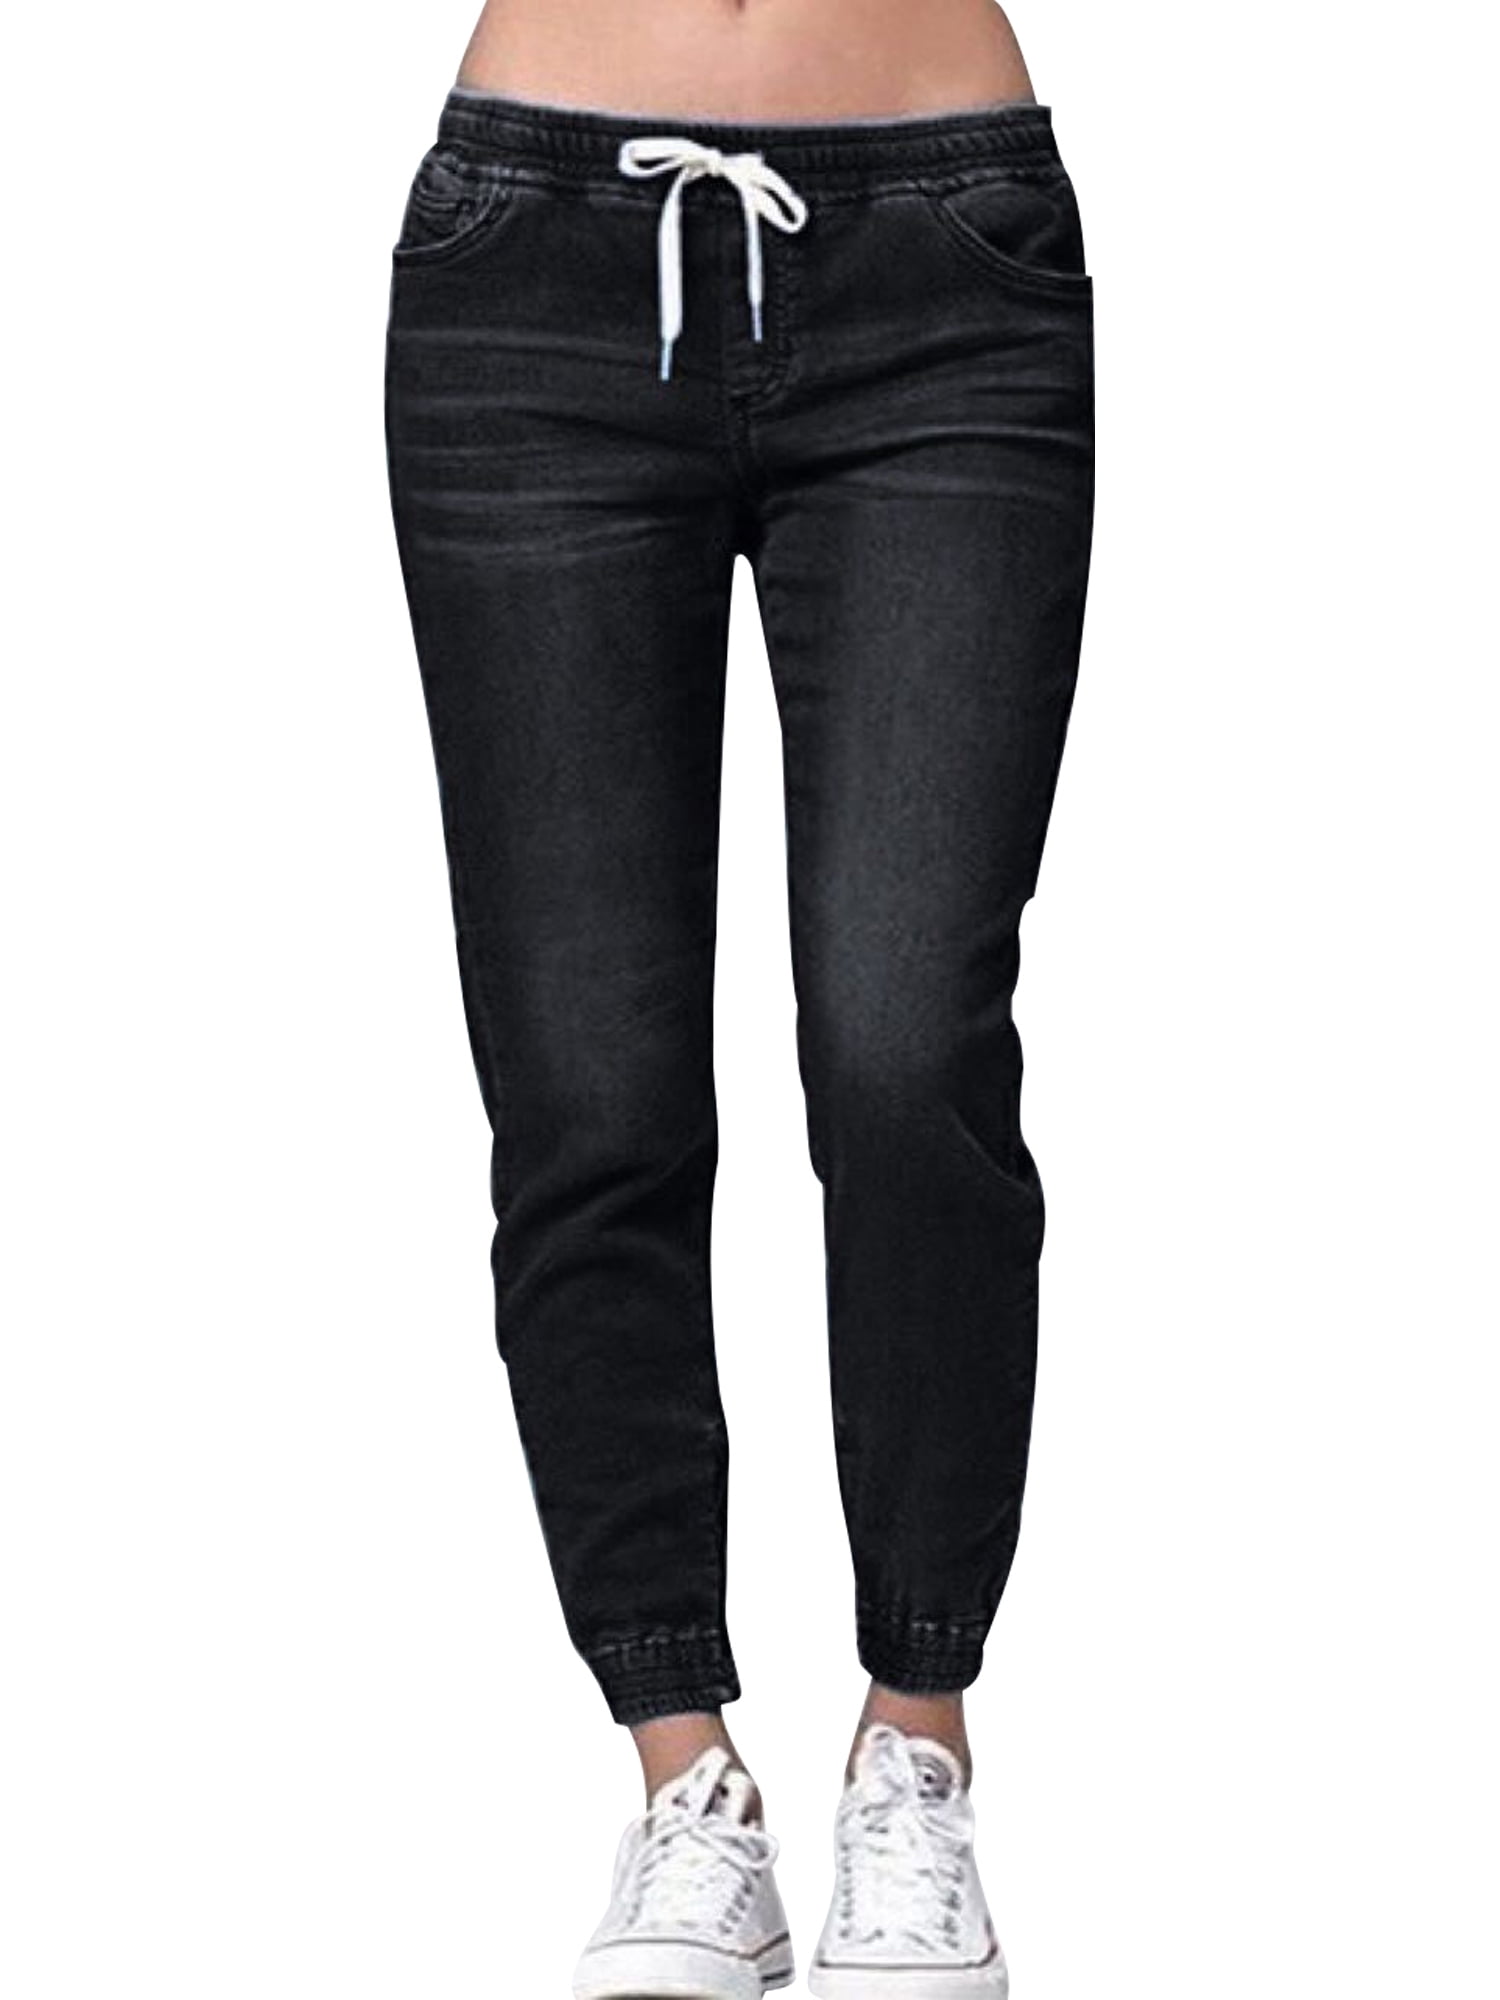 New Jeans Skinny Ladies Womens Fit Stretch Jeggings Trousers Denim Blue Black